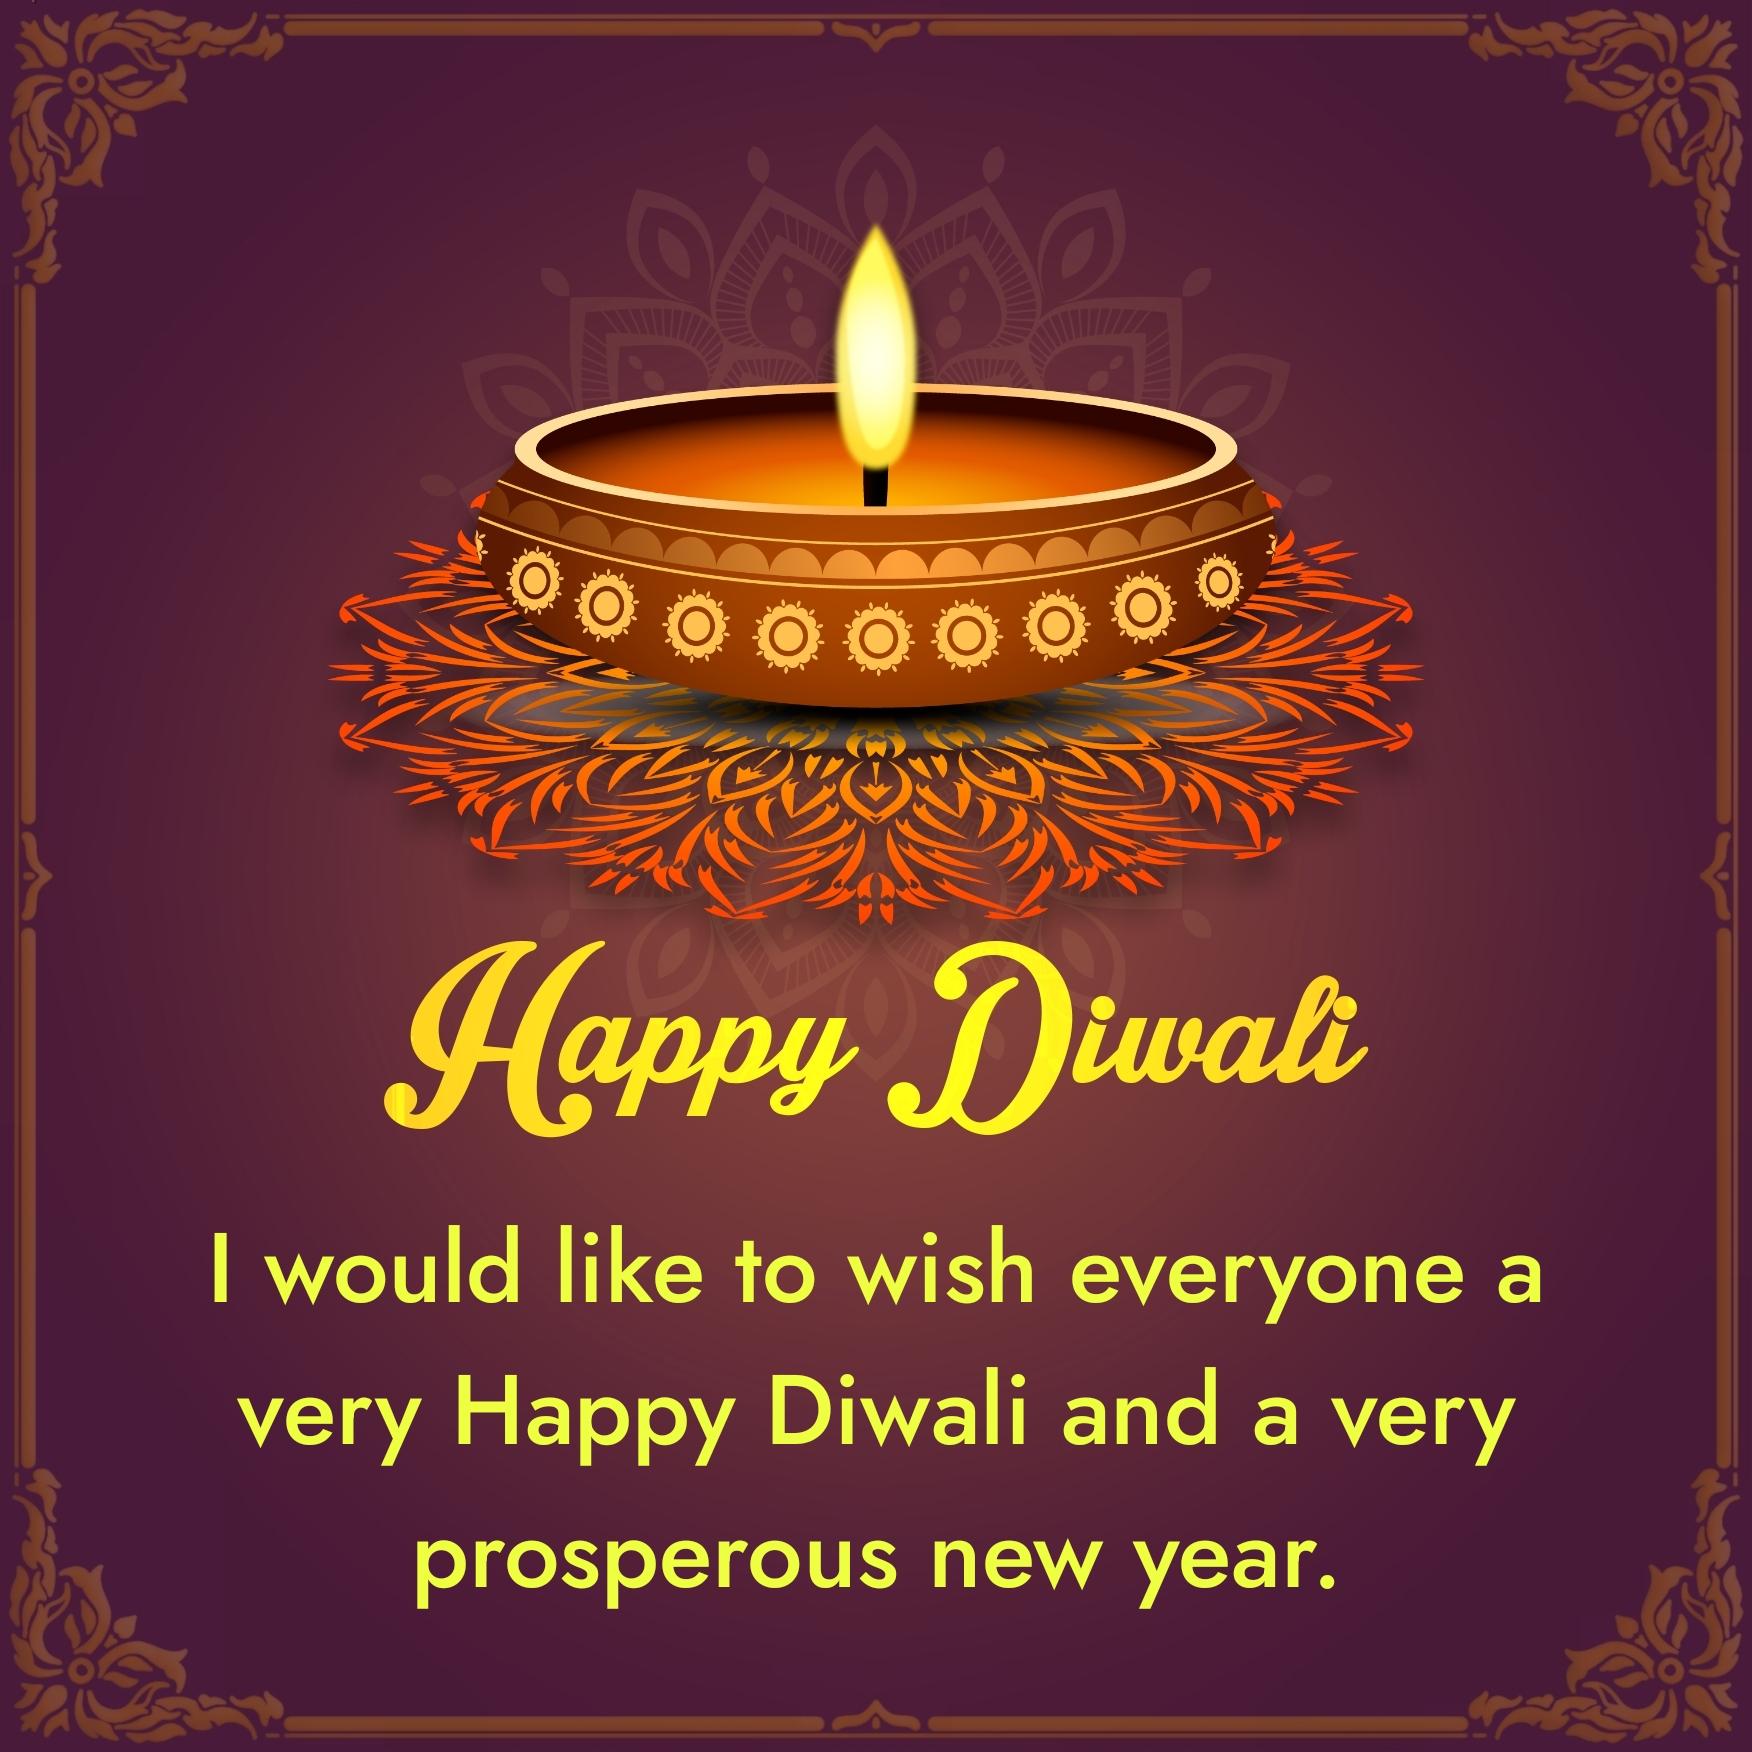 I would like to wish everyone a very Happy Diwali